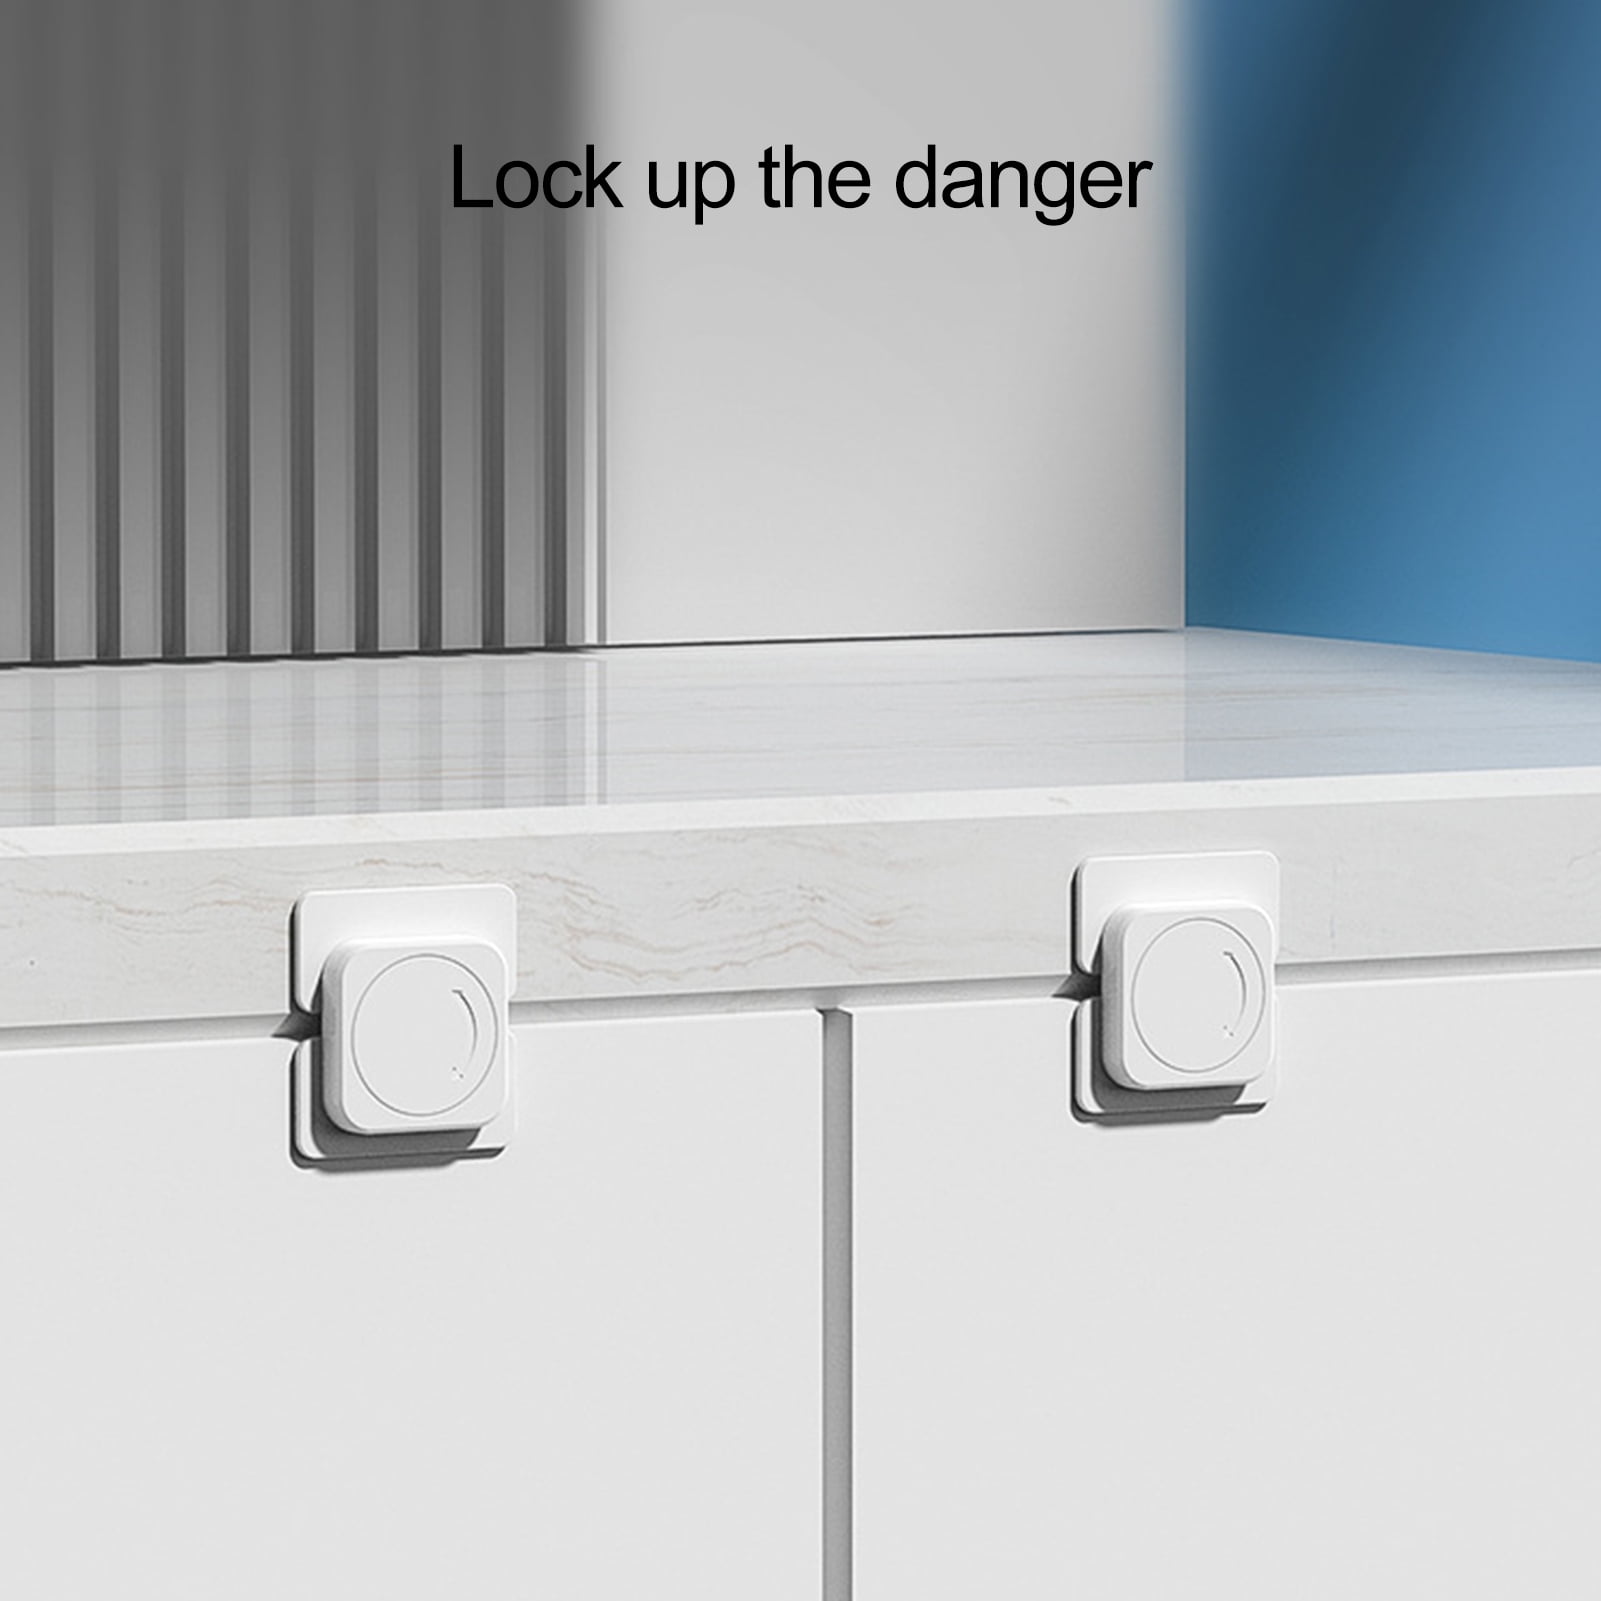 1pcs 90-Degree No-Hole Refrigerator Lock Plain Drawer Lock Anti